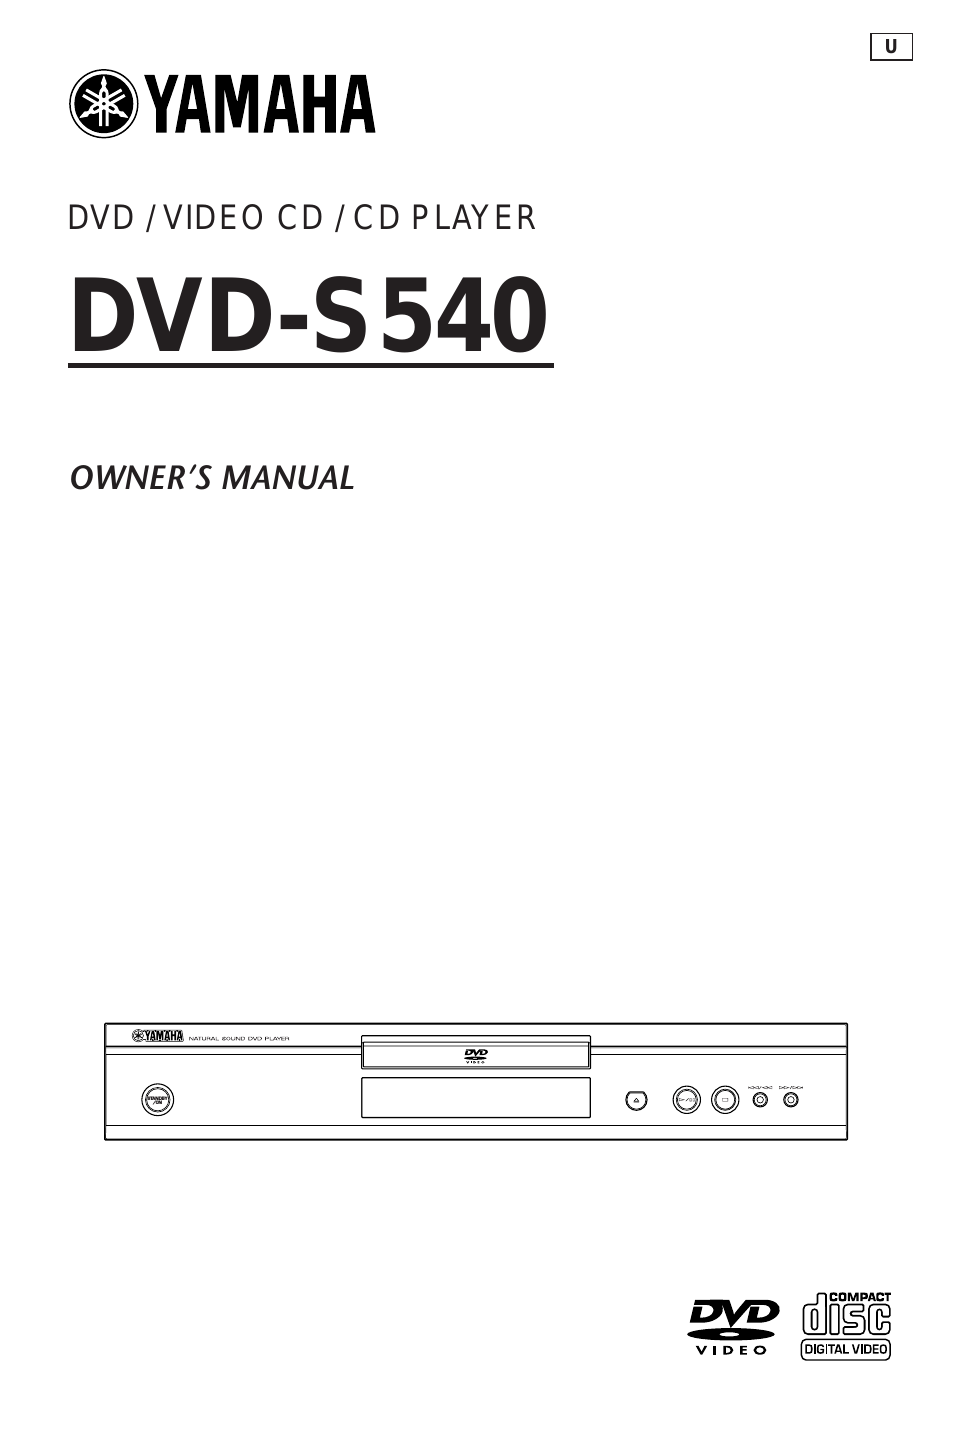 DVD-S540